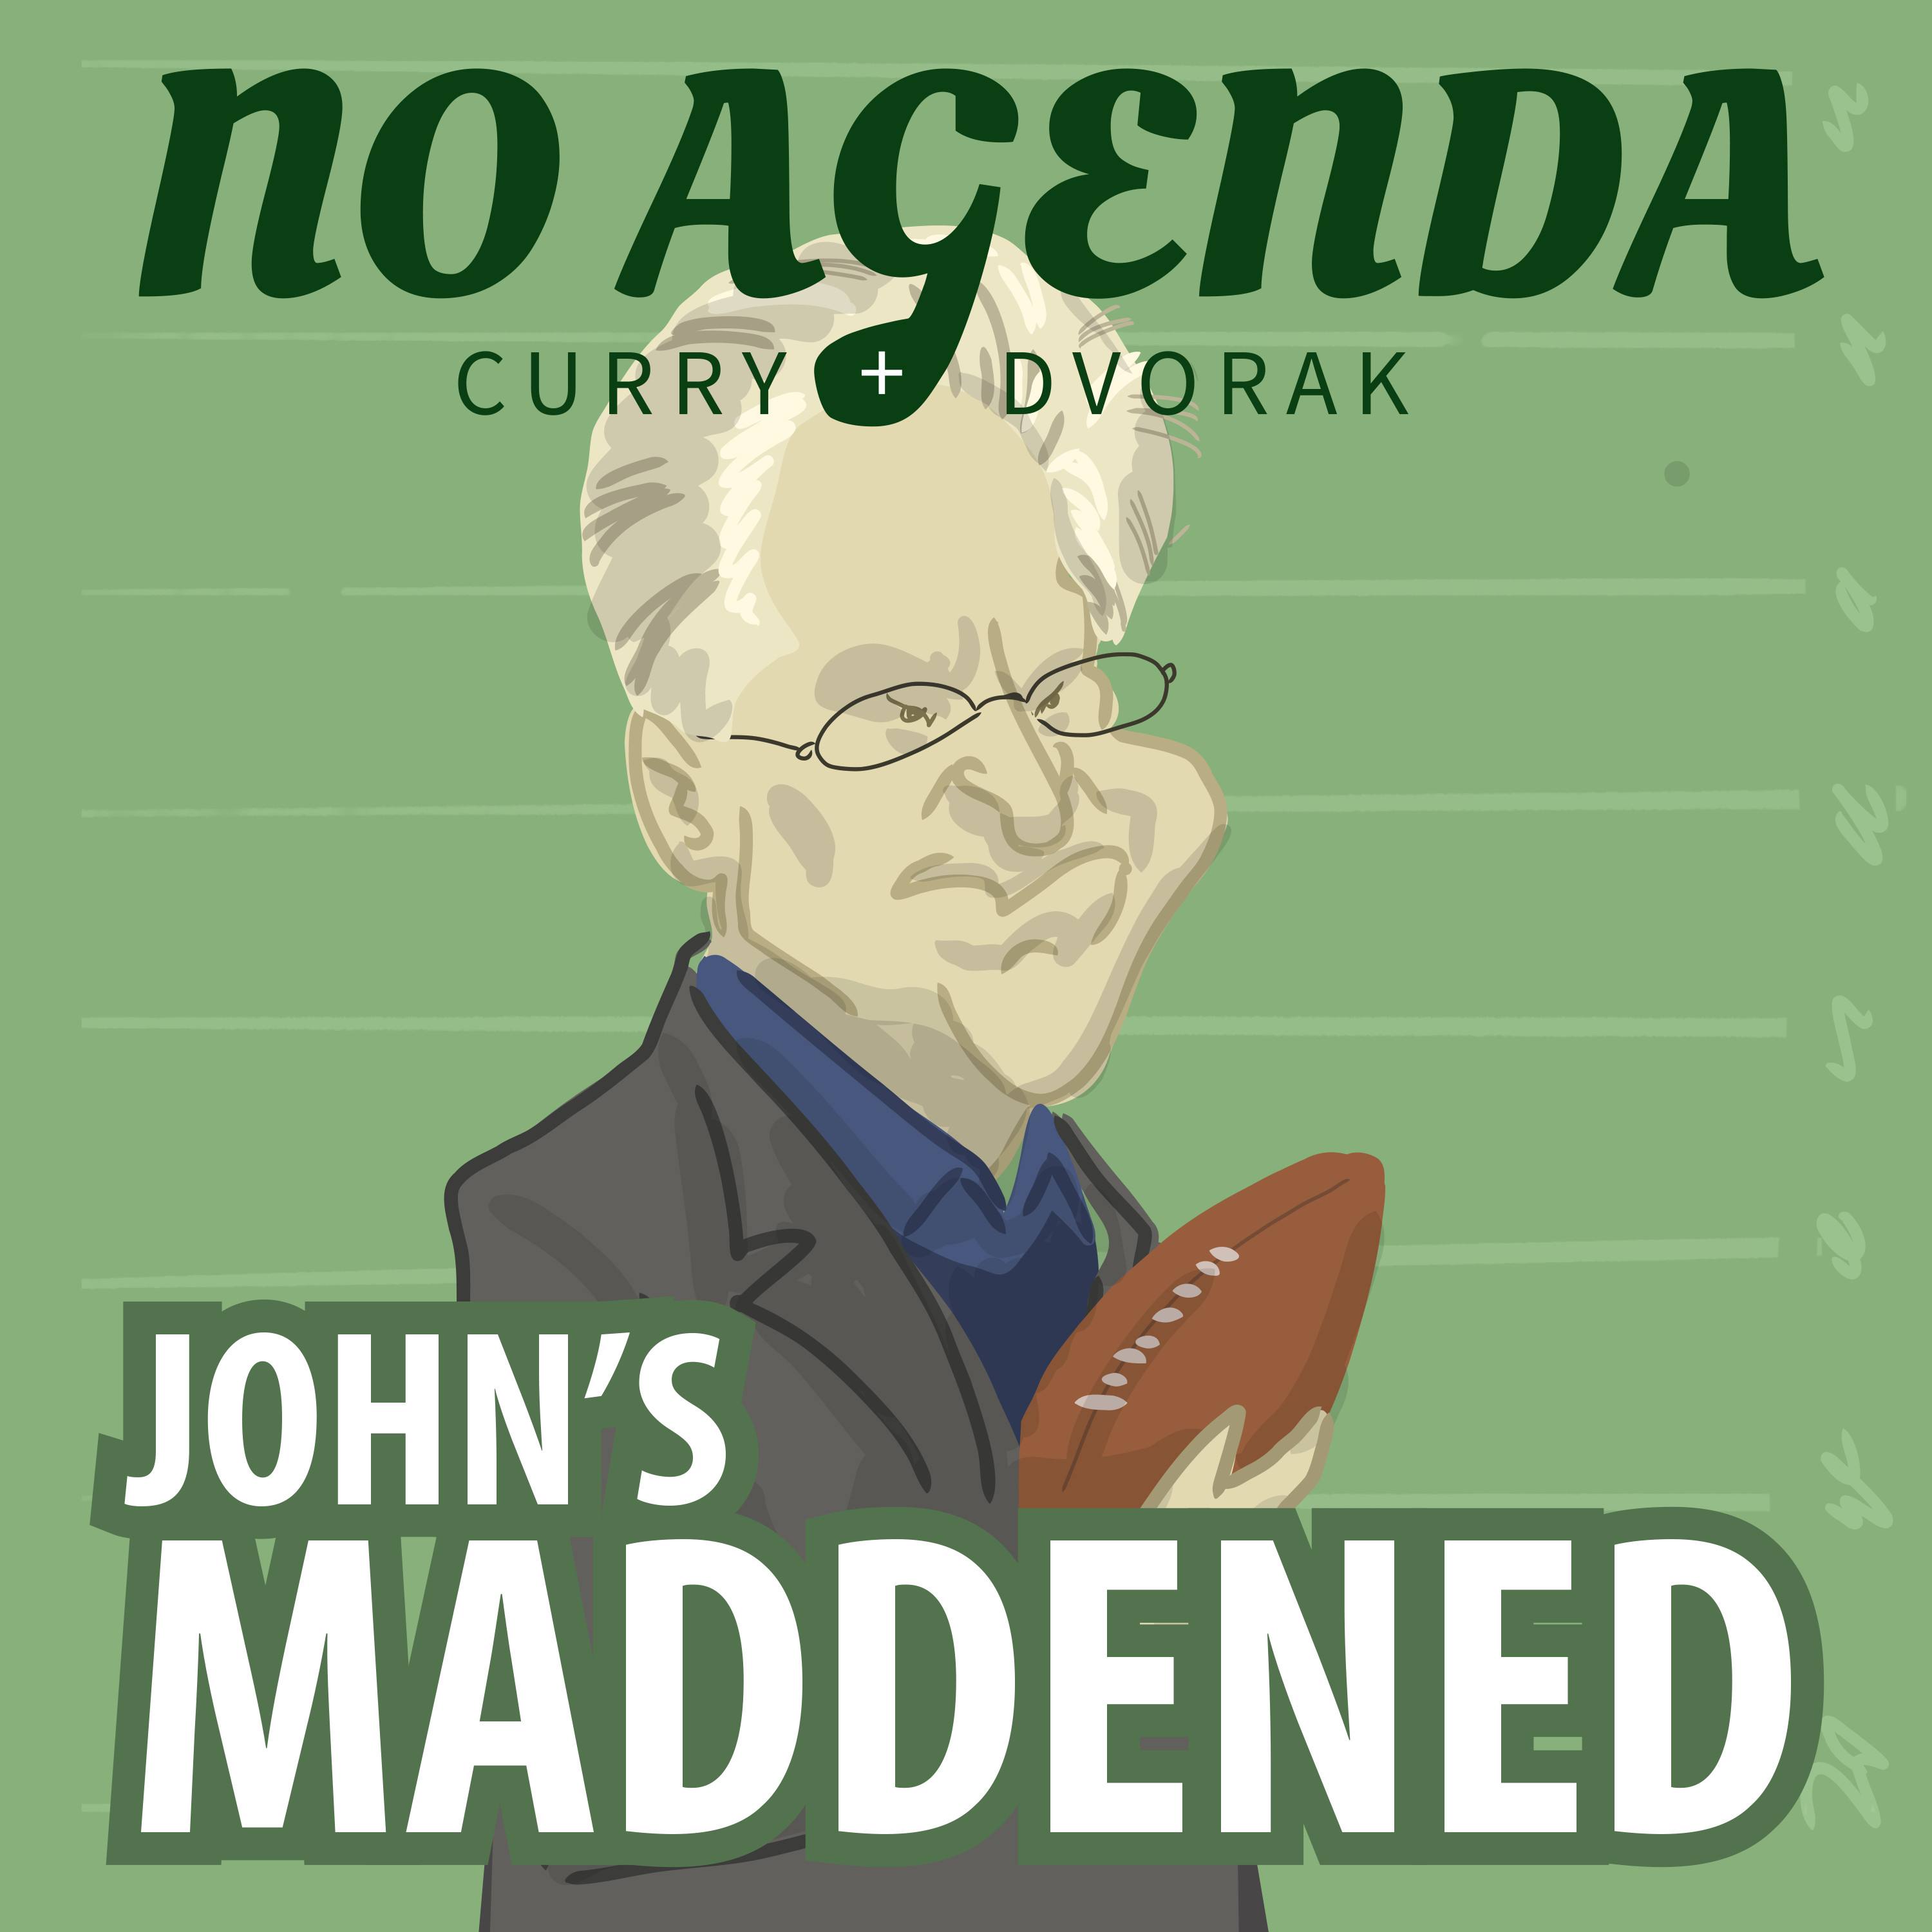 John's Maddened by JKON SKETCH for 